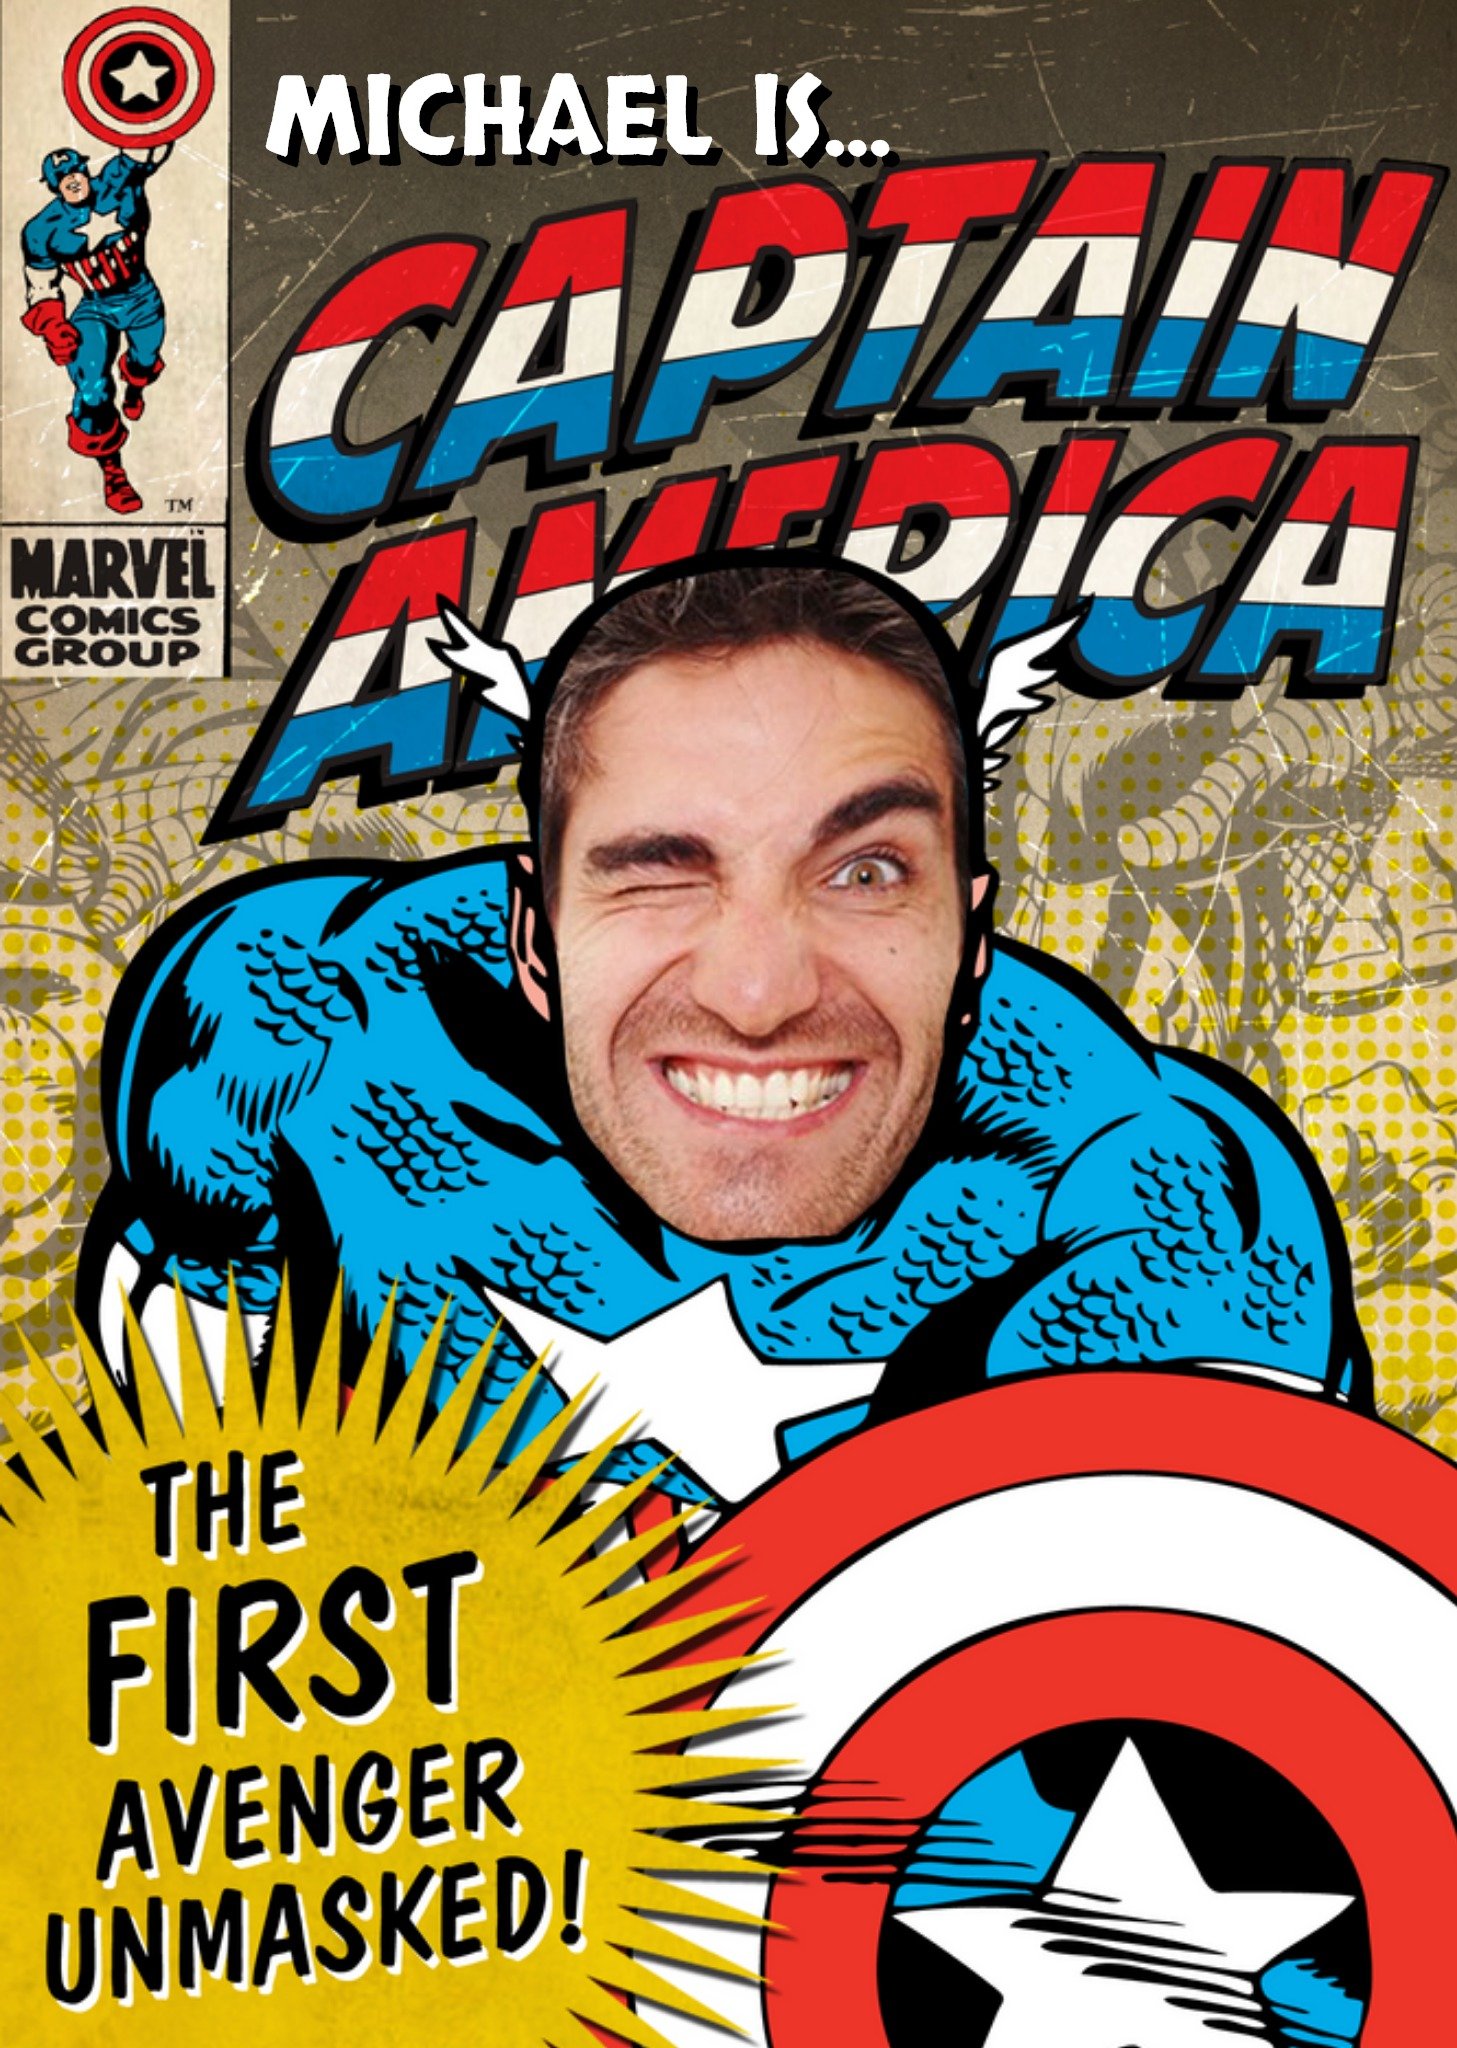 Disney Captain America Face Photo Card, Large